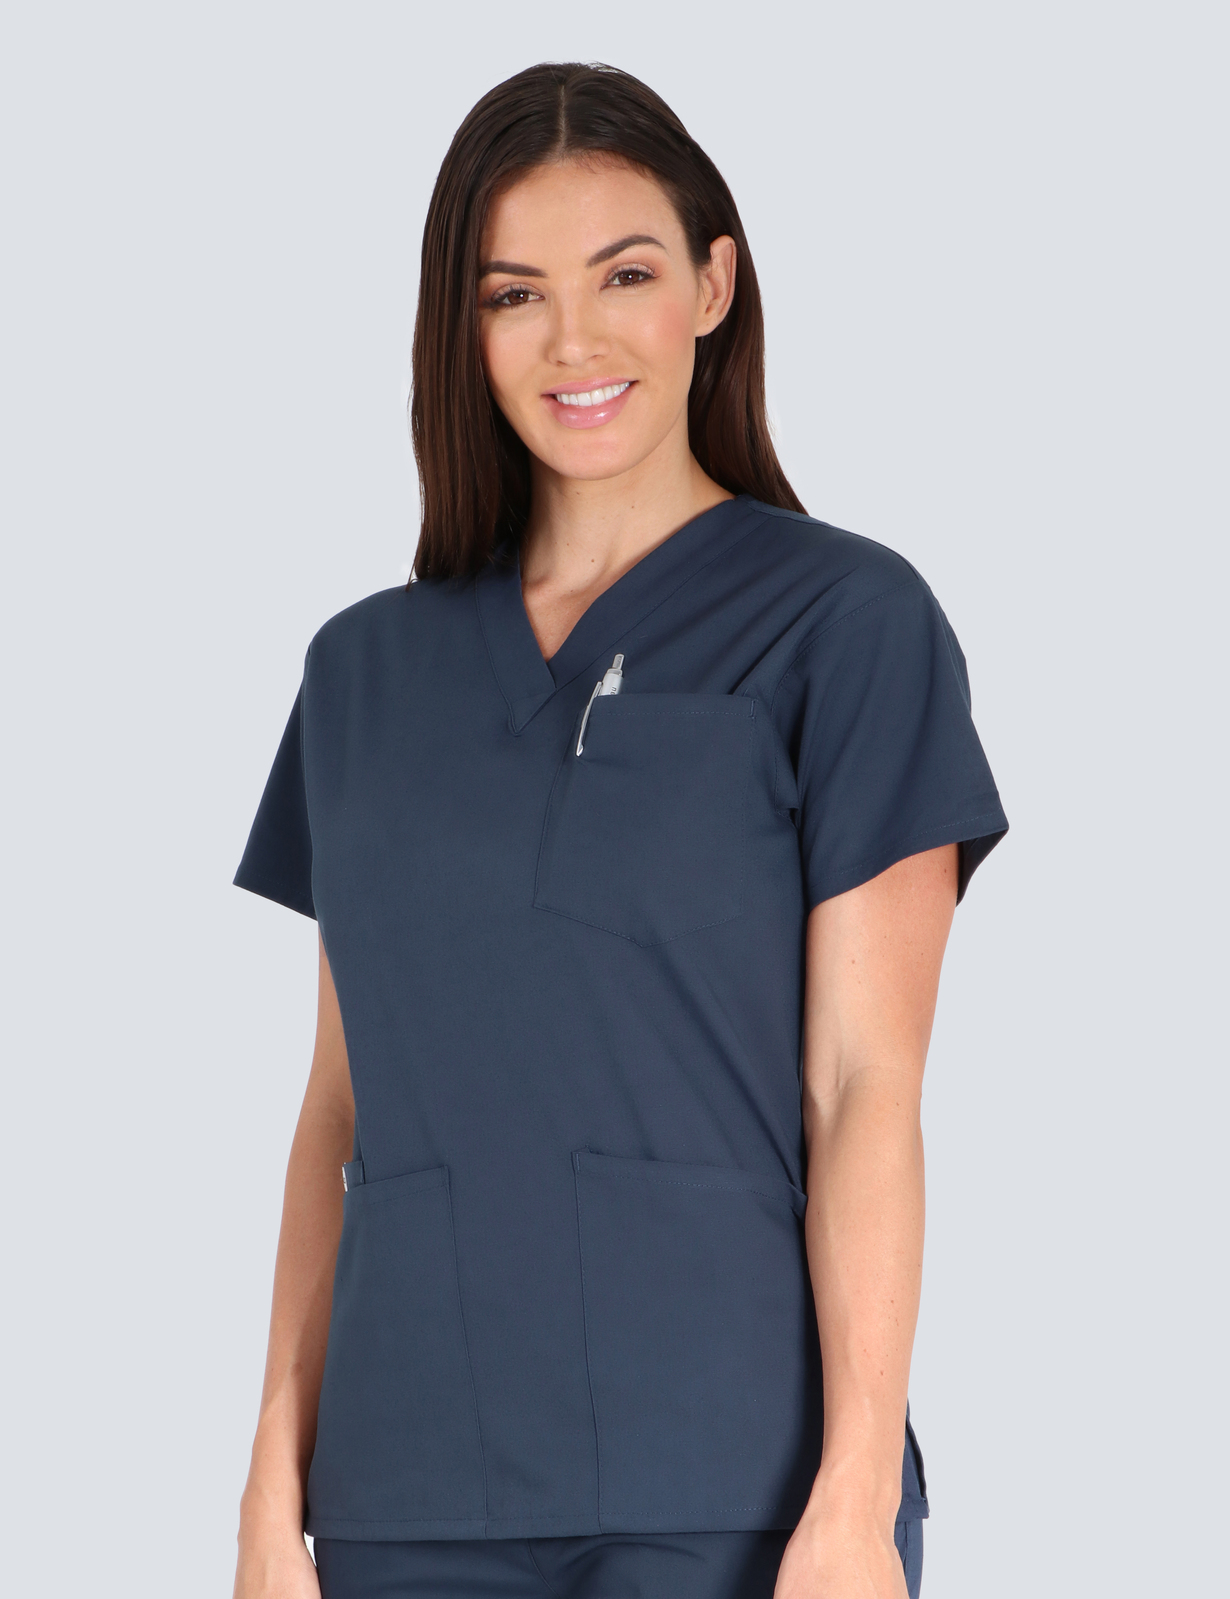 Flinders Medical Centre - Nurse Practitioner (4 Pocket Scrub Top in Navy incl Logos)